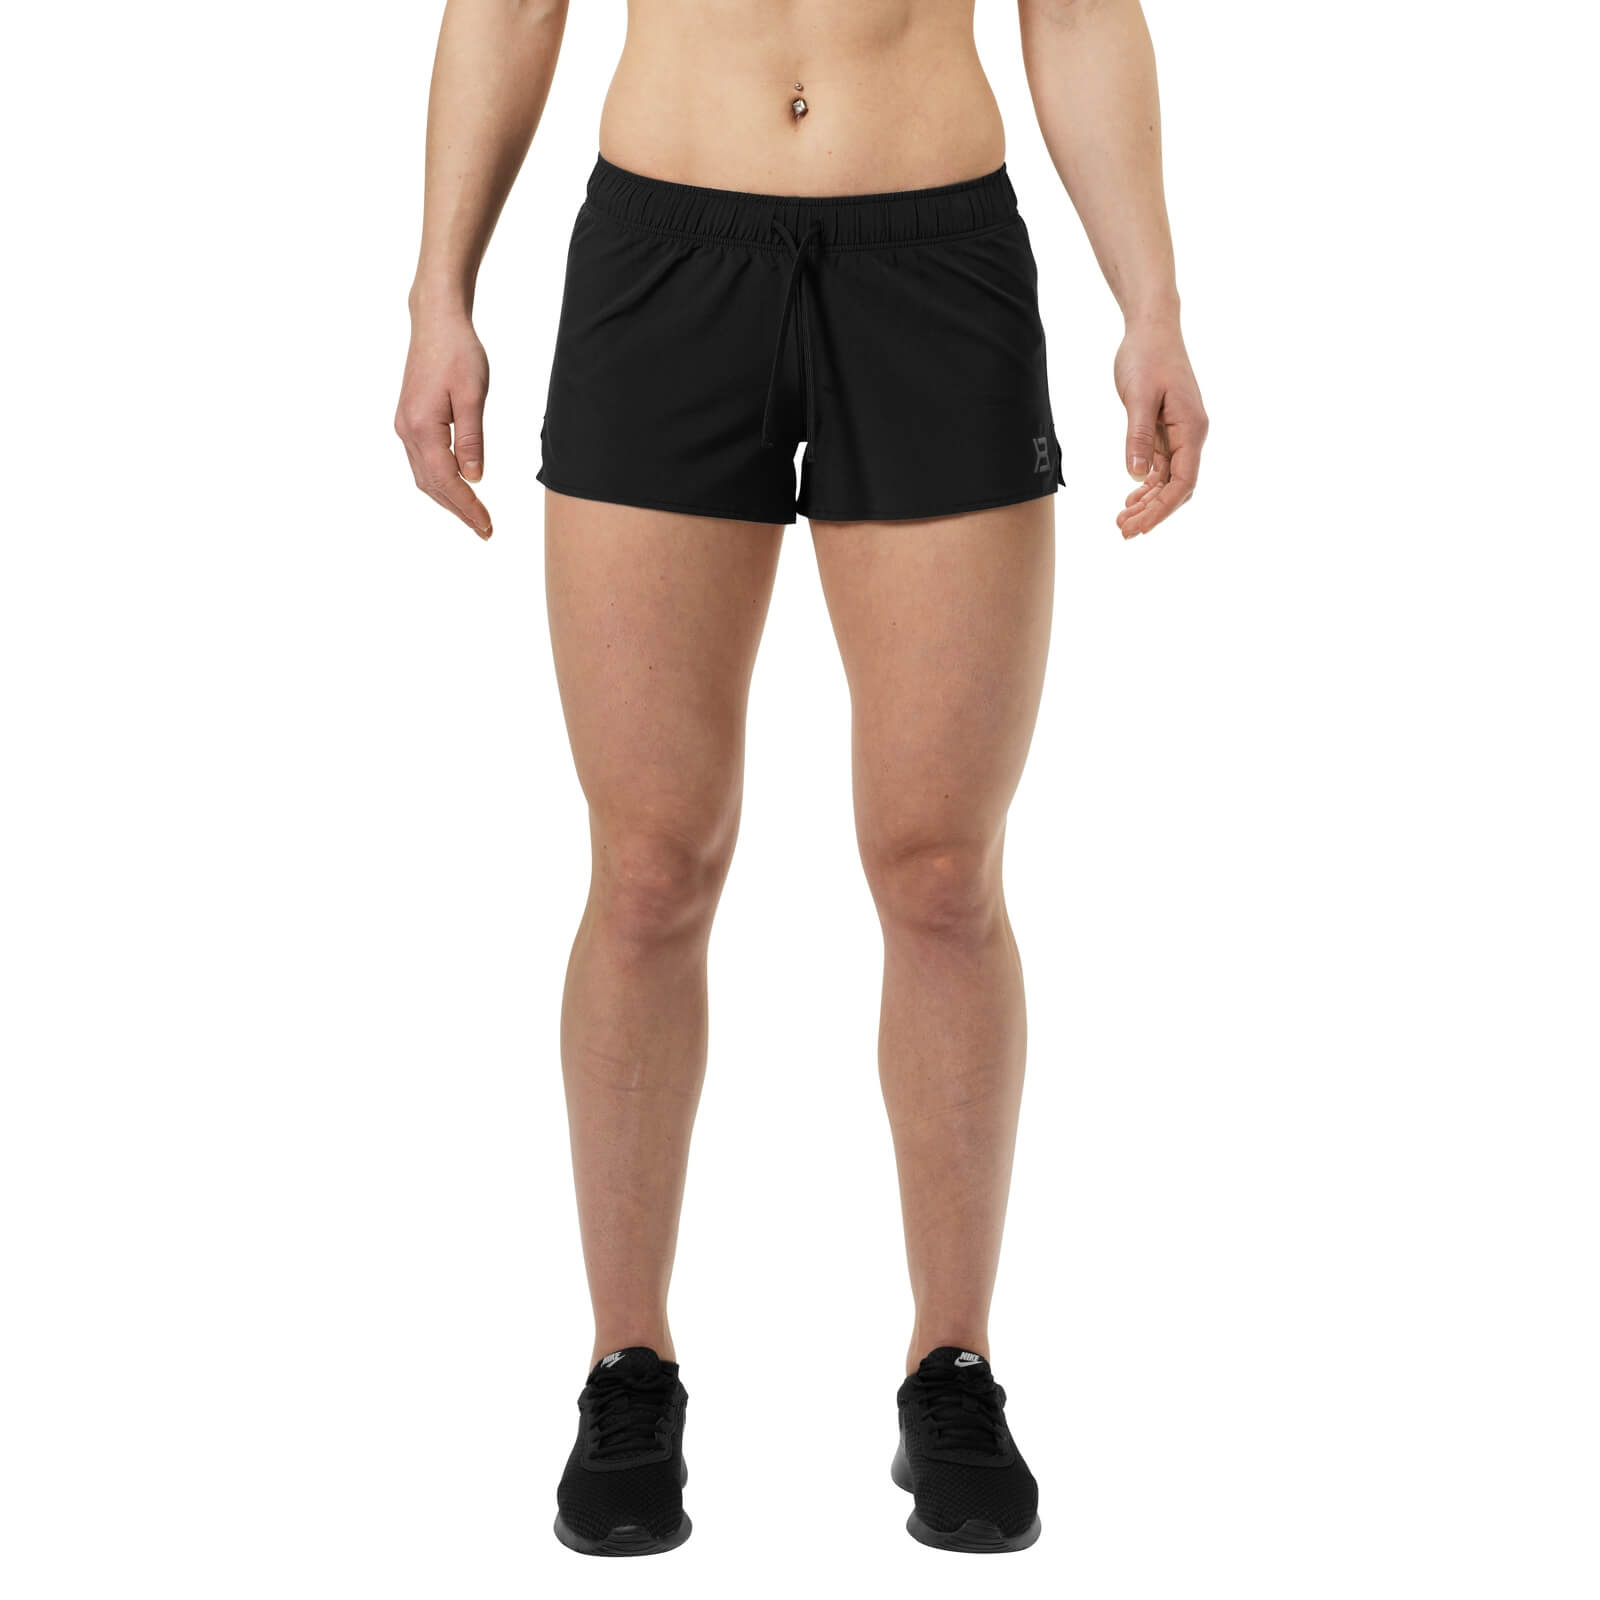 Sjekke Nolita Shorts, black, Better Bodies hos SportGymButikken.no